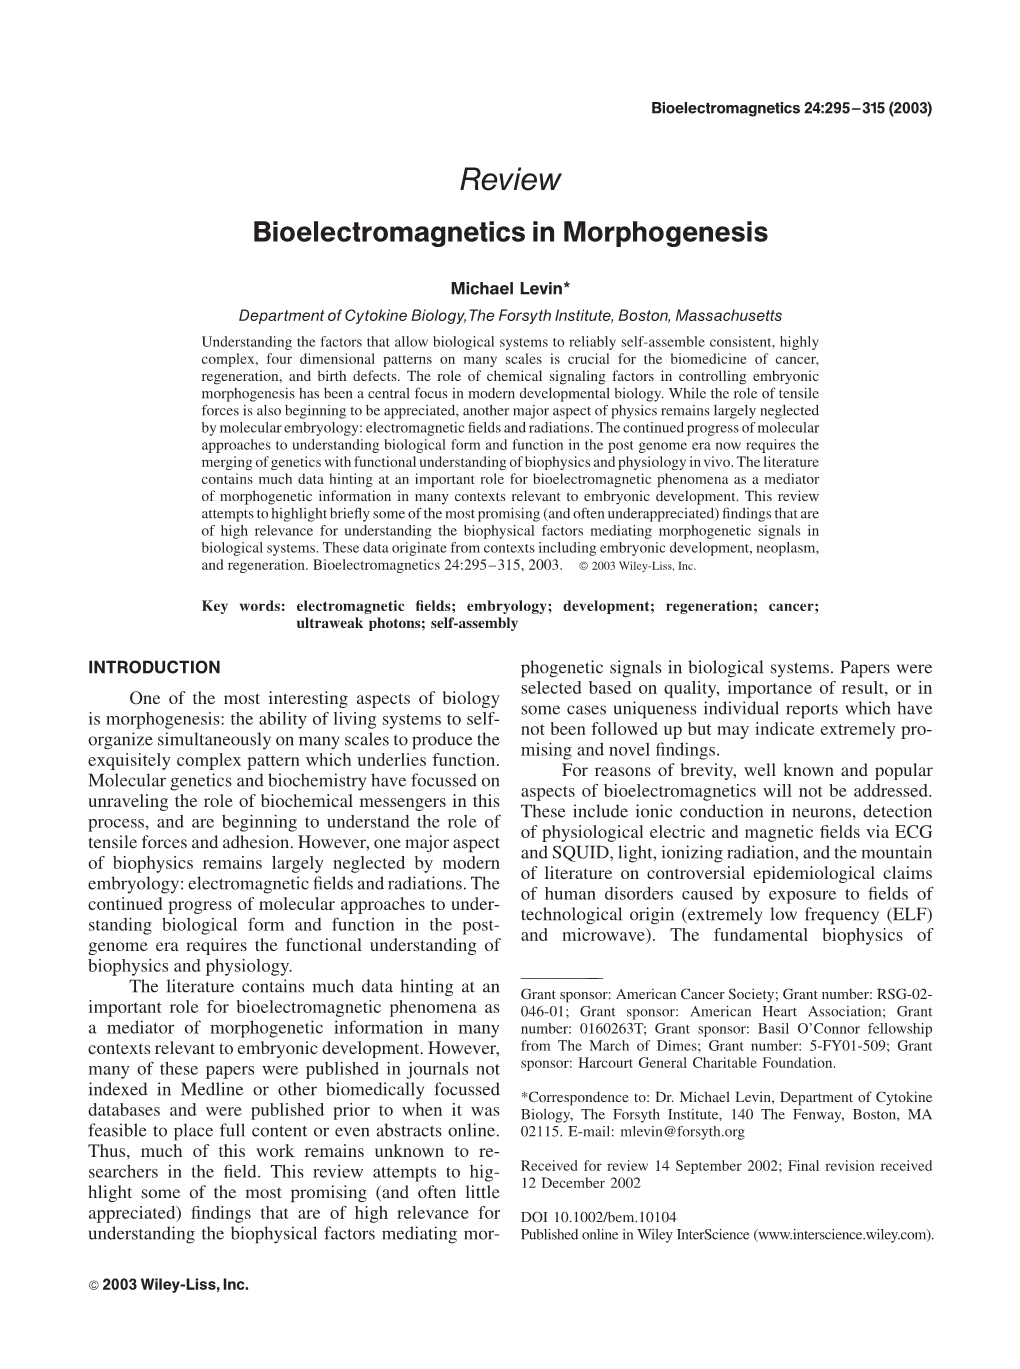 Review Bioelectromagnetics in Morphogenesis